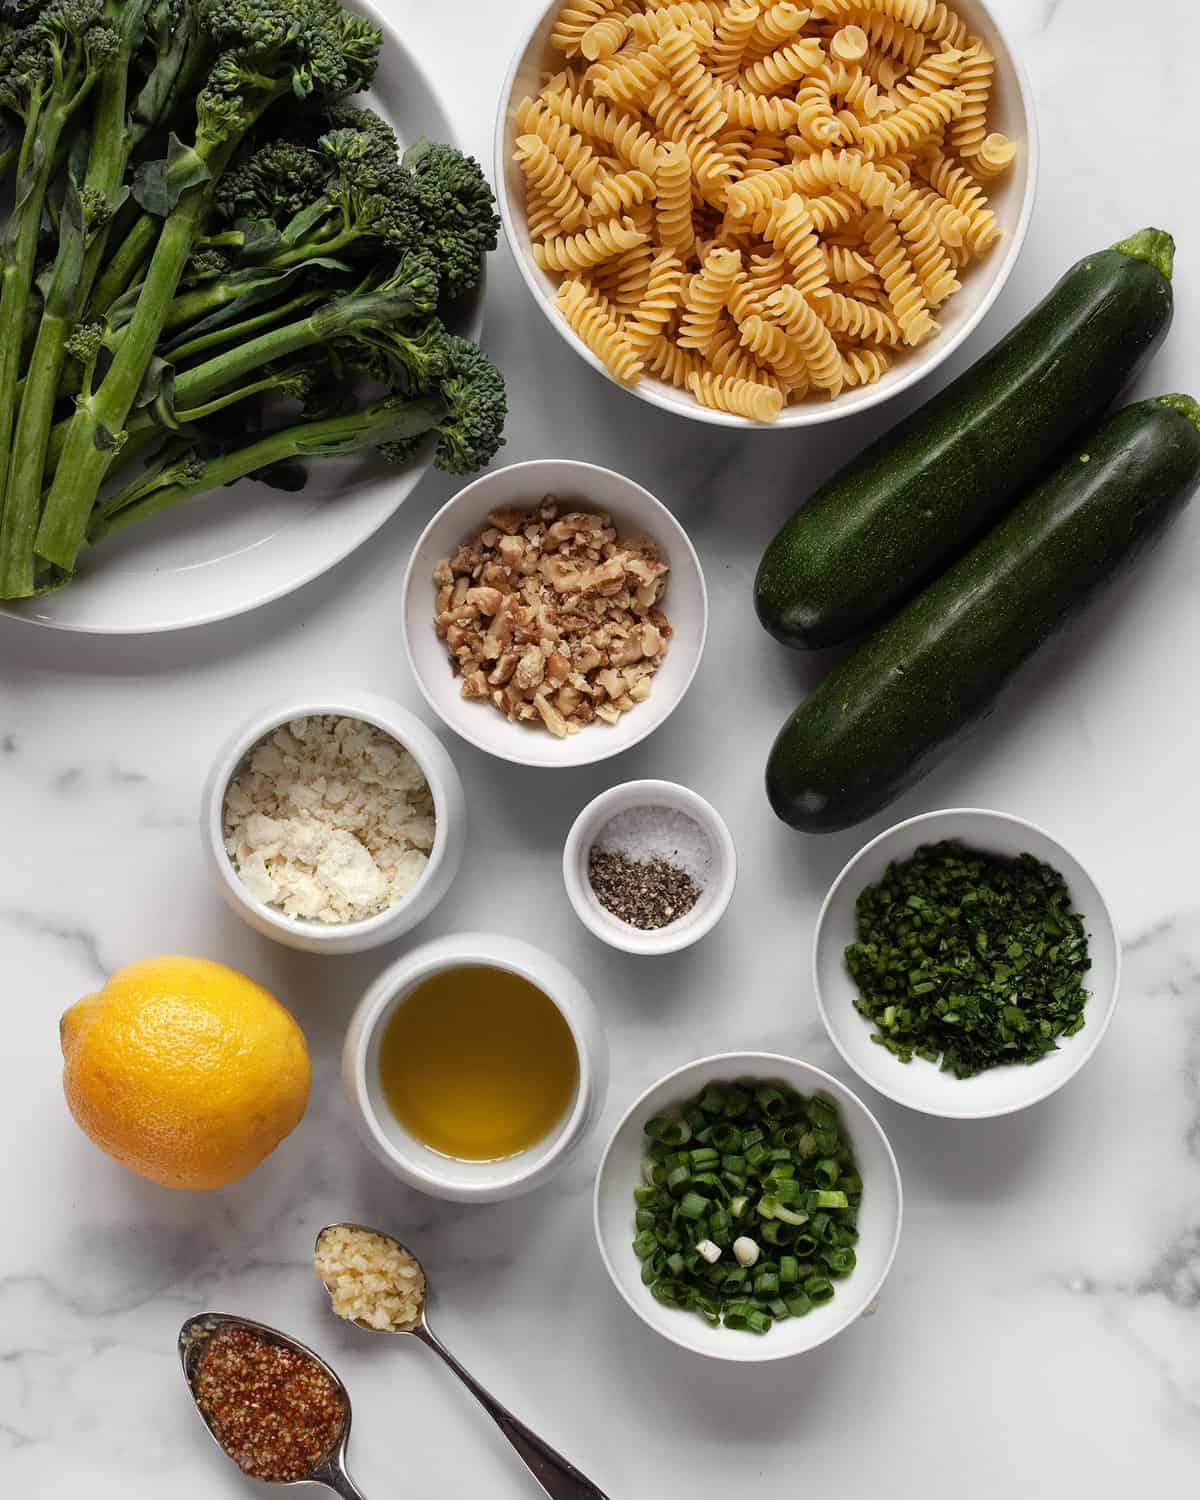 Ingredients including broccolini, zucchini, pasta, lemon, walnuts, lemon, olive oil, feta, salt and pepper.